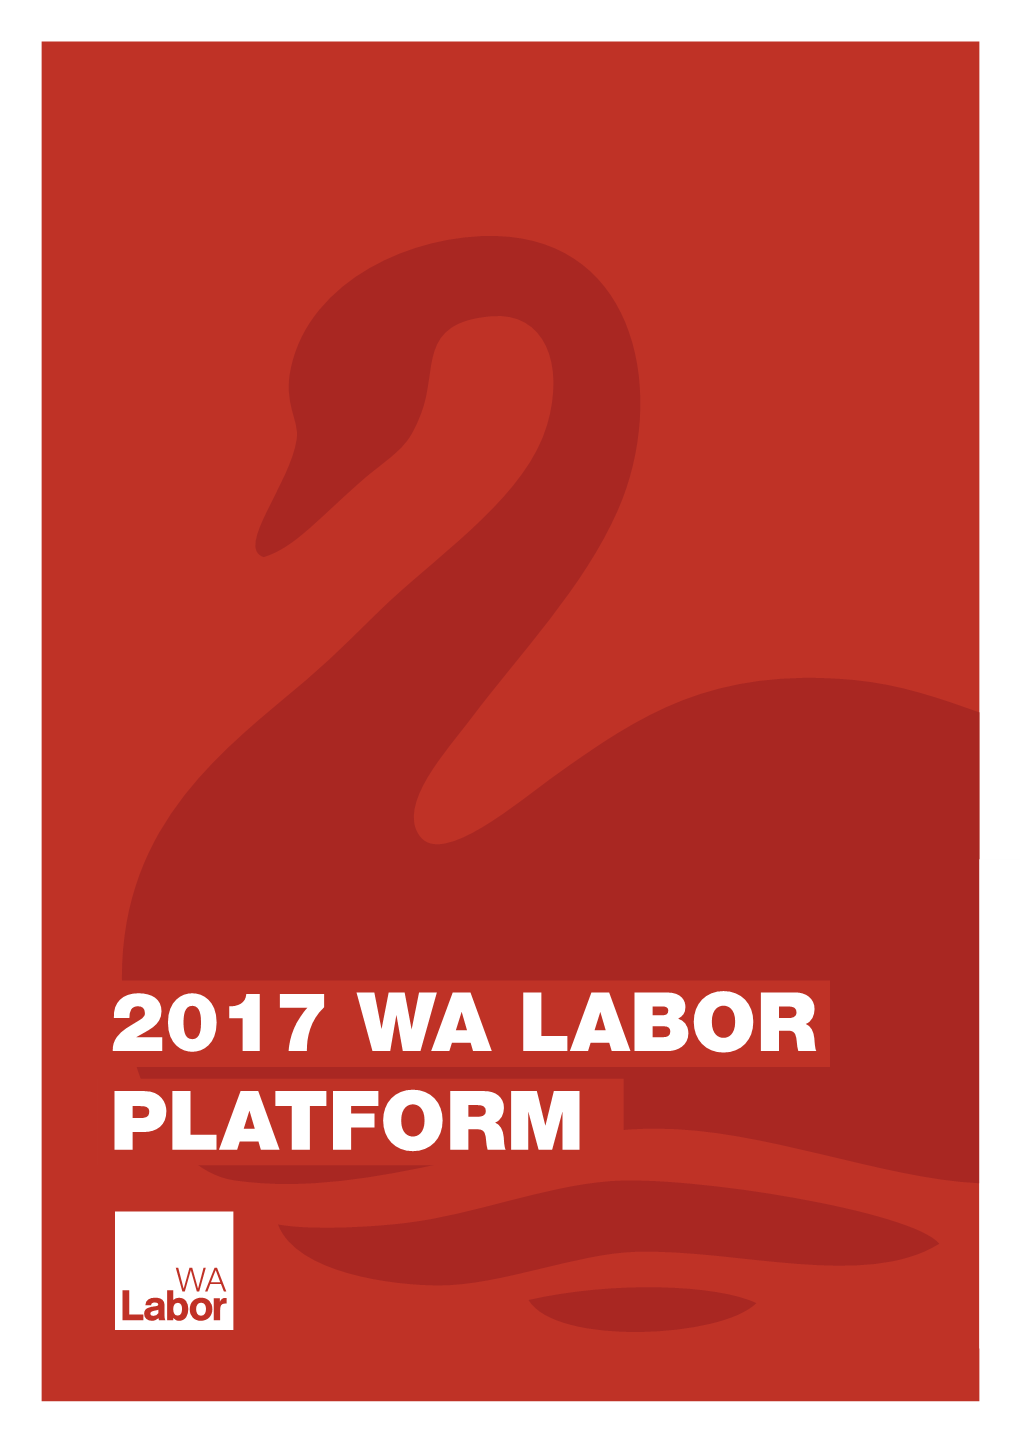 2017 Wa Labor Platform Contents